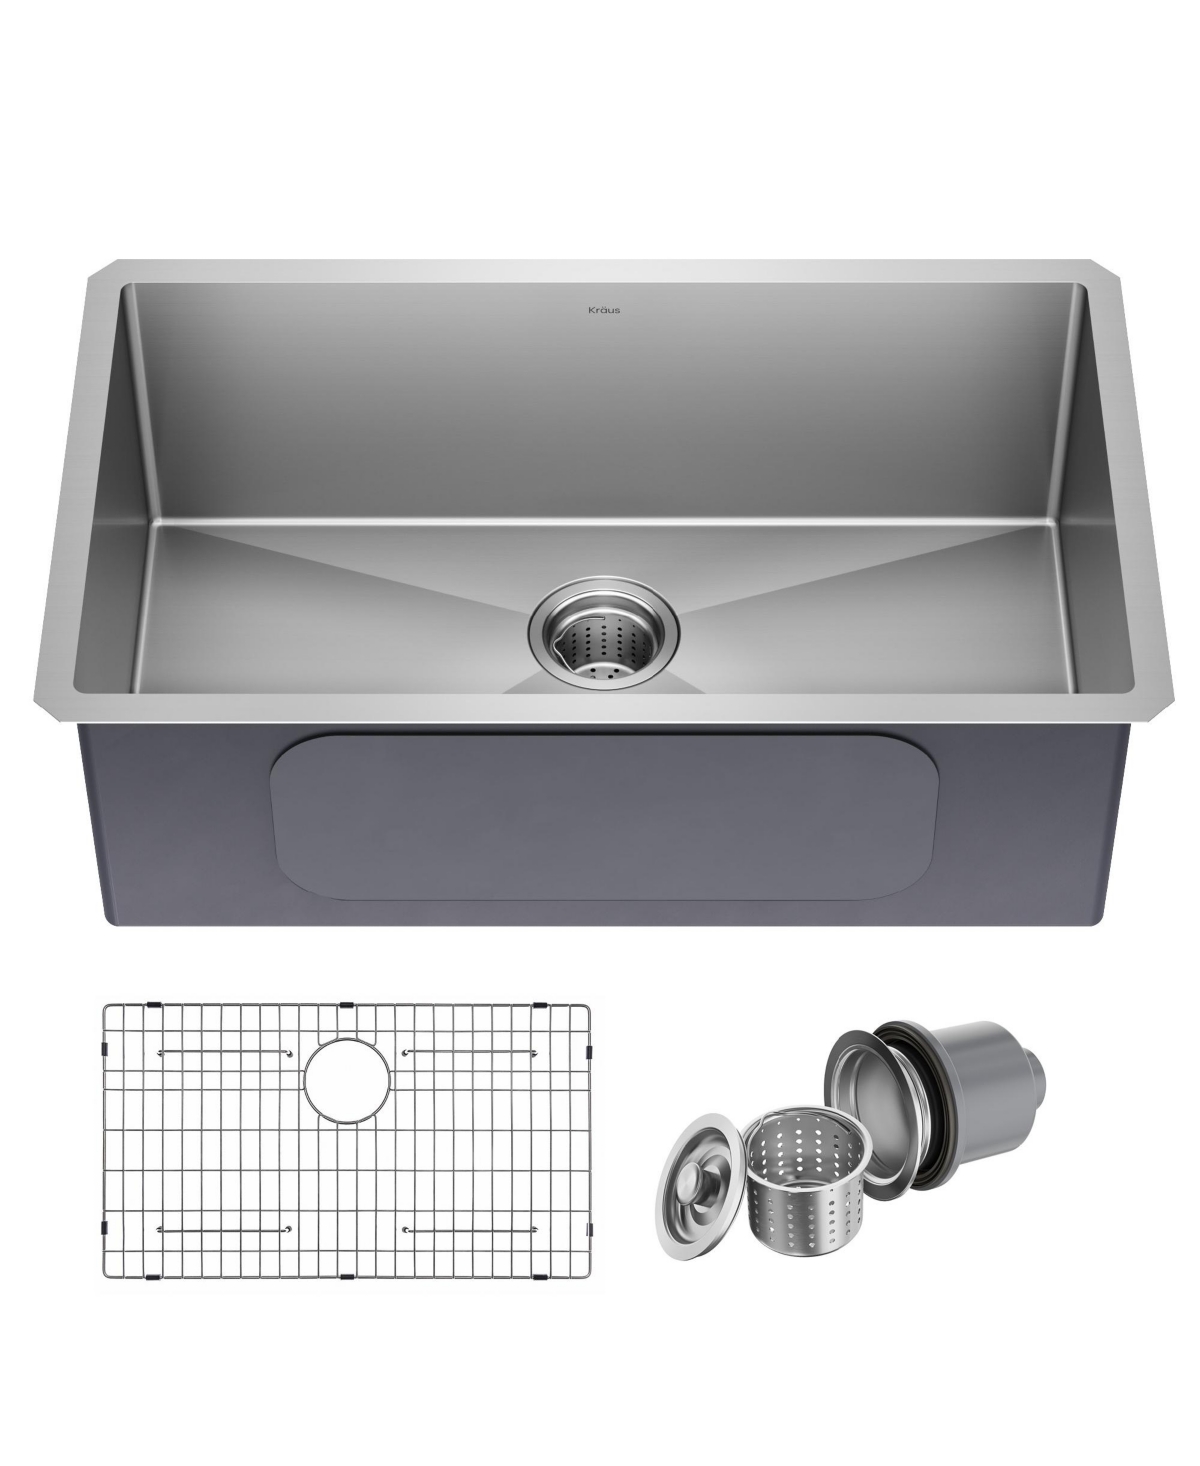 Standart Pro 30 in. 16 Gauge Undermount Single Bowl Stainless Steel Kitchen Sink - Stainless steel